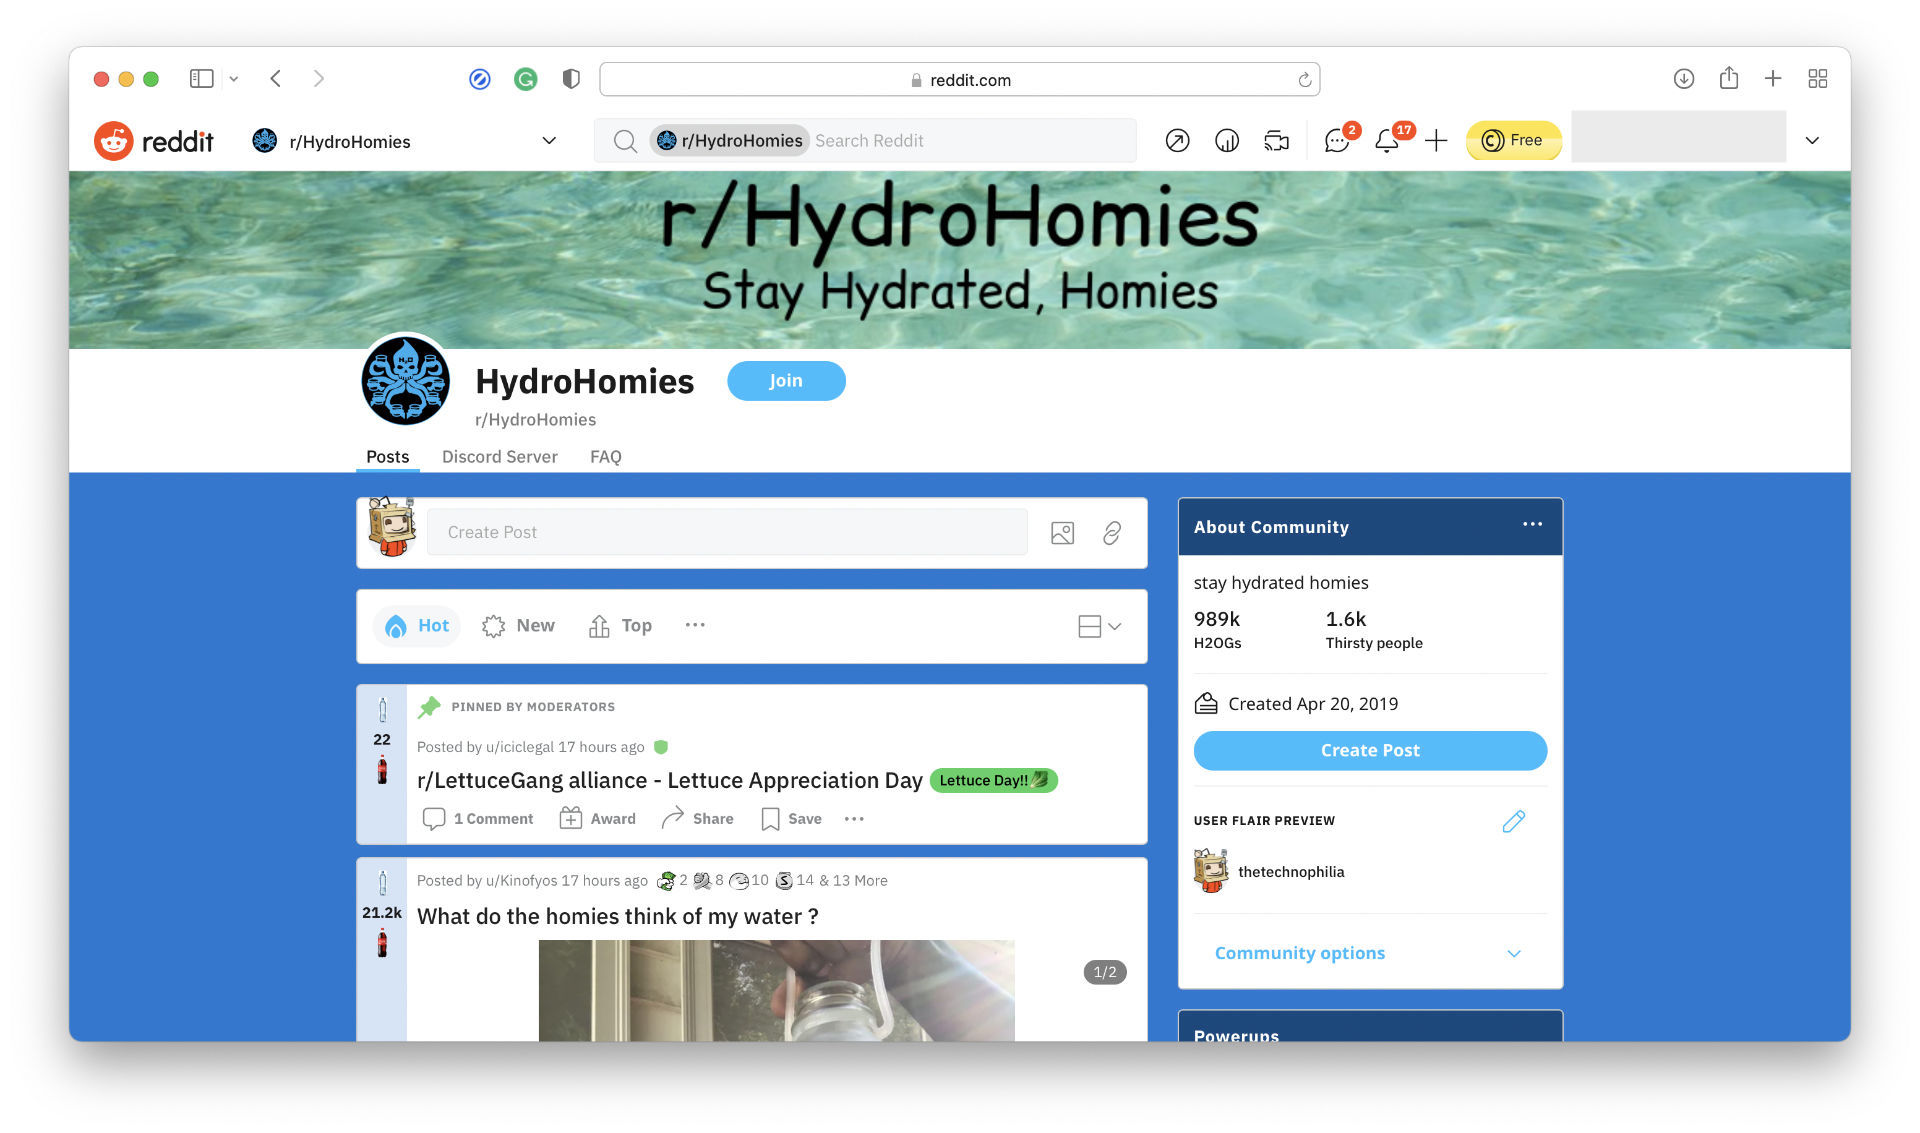 HydroHomies Subreddit